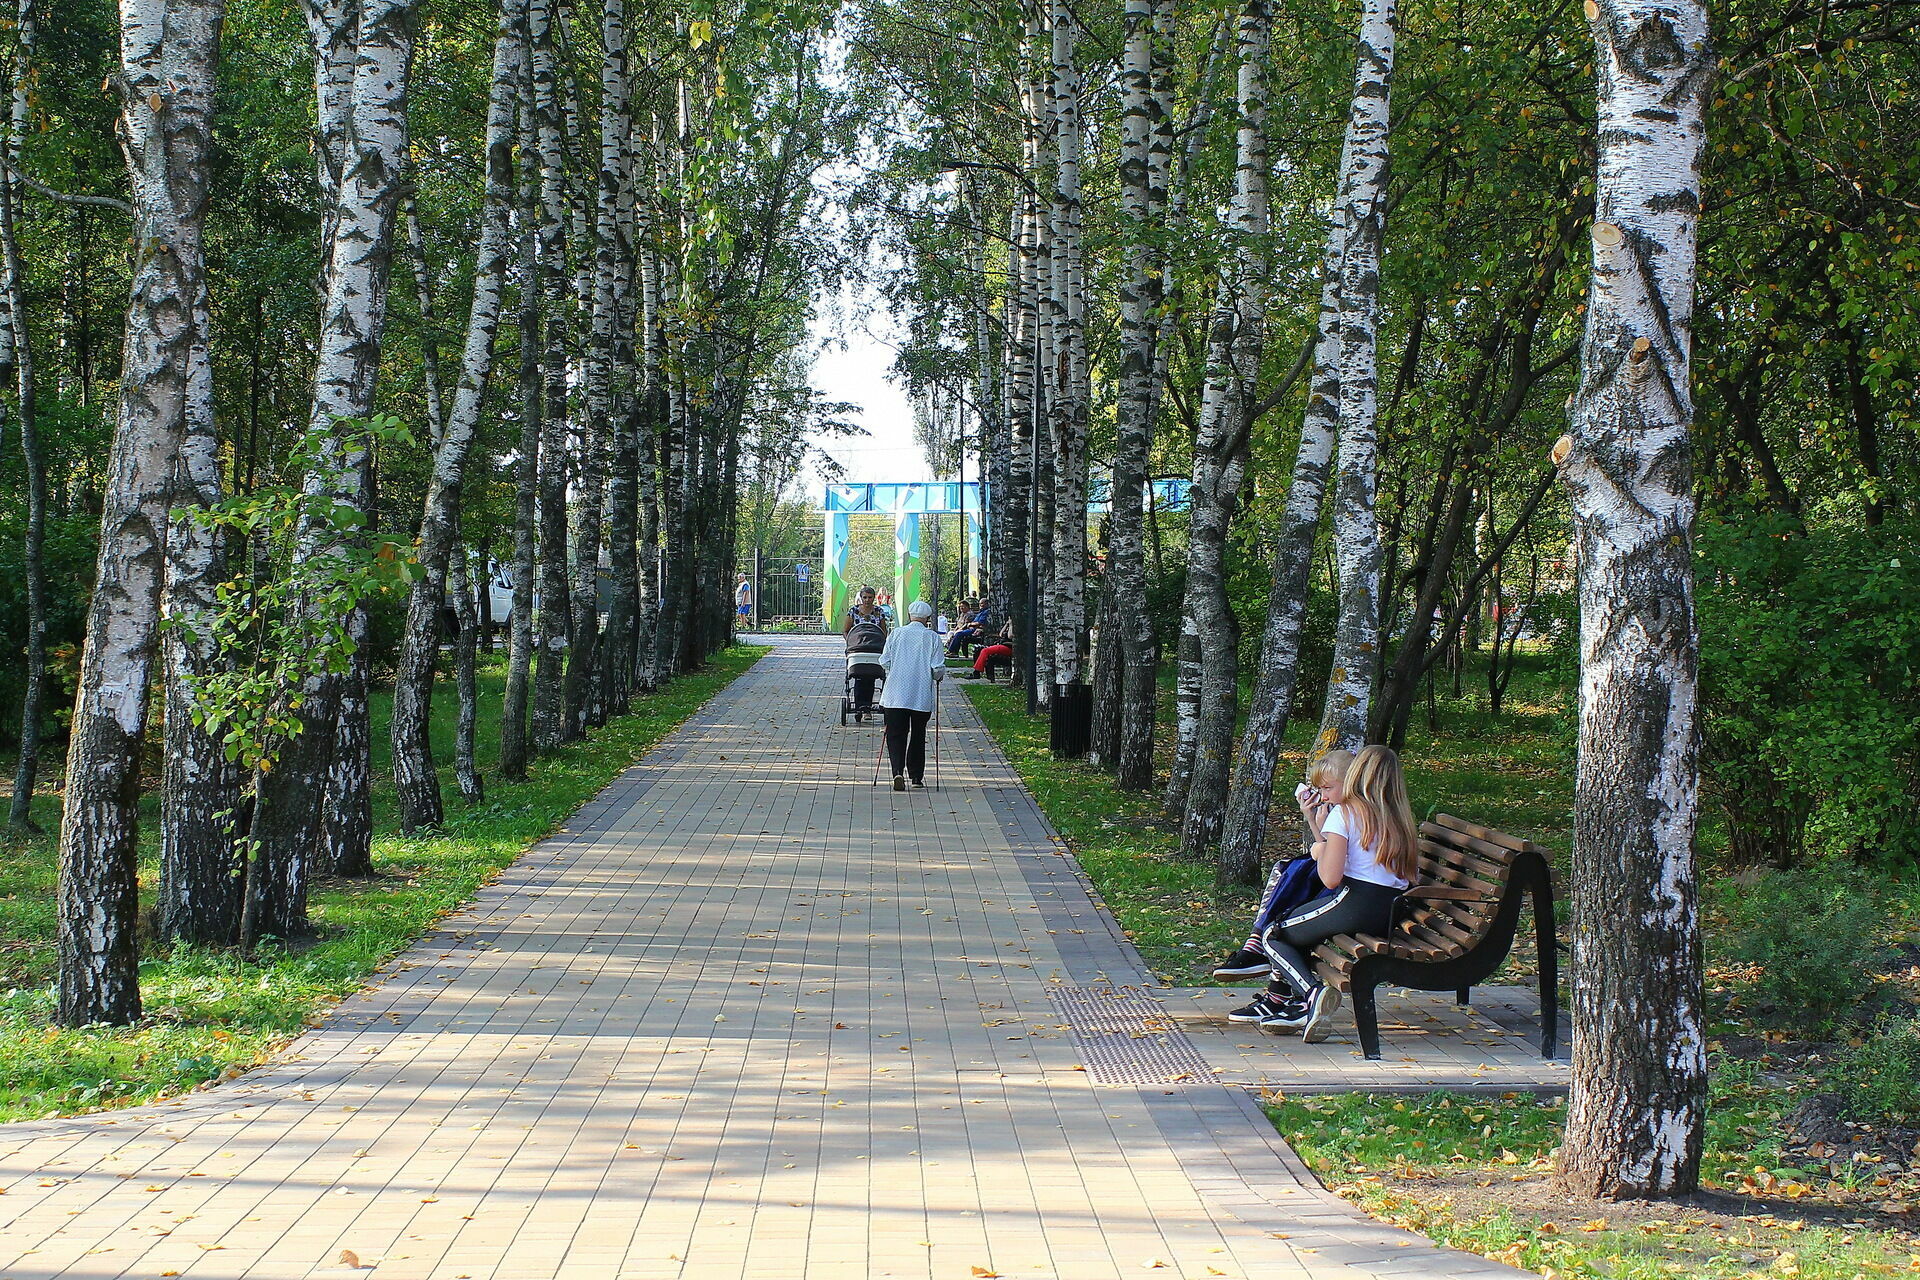 Светлоярский парк нижний новгород